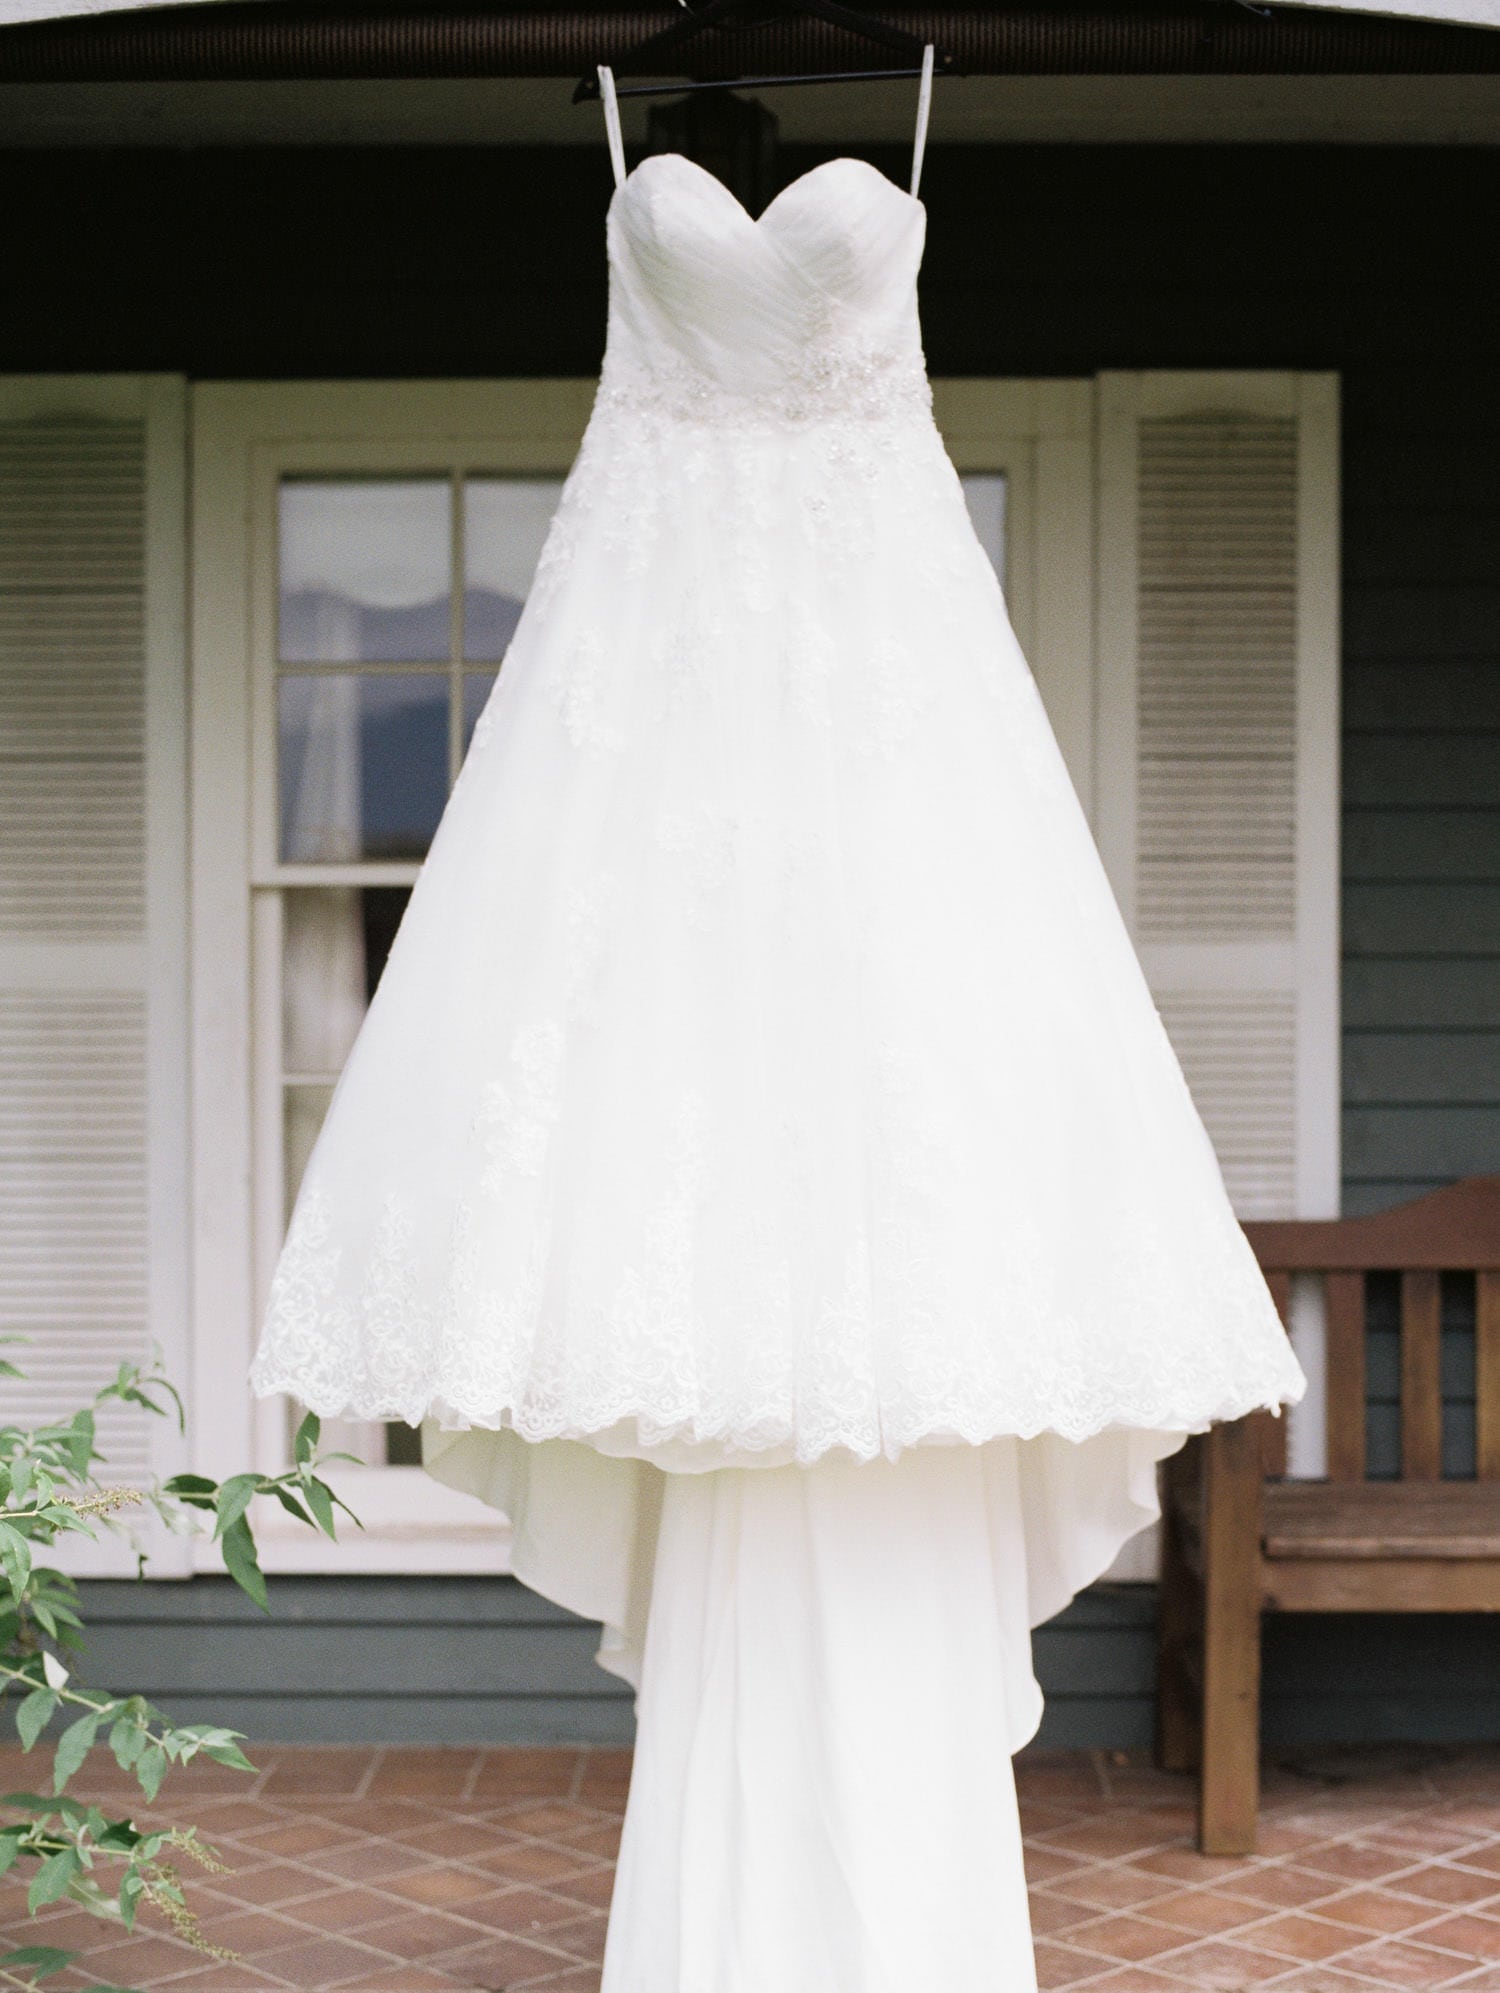 Wedding dress hanging, Fuji400h | Vancouver wedding photographer